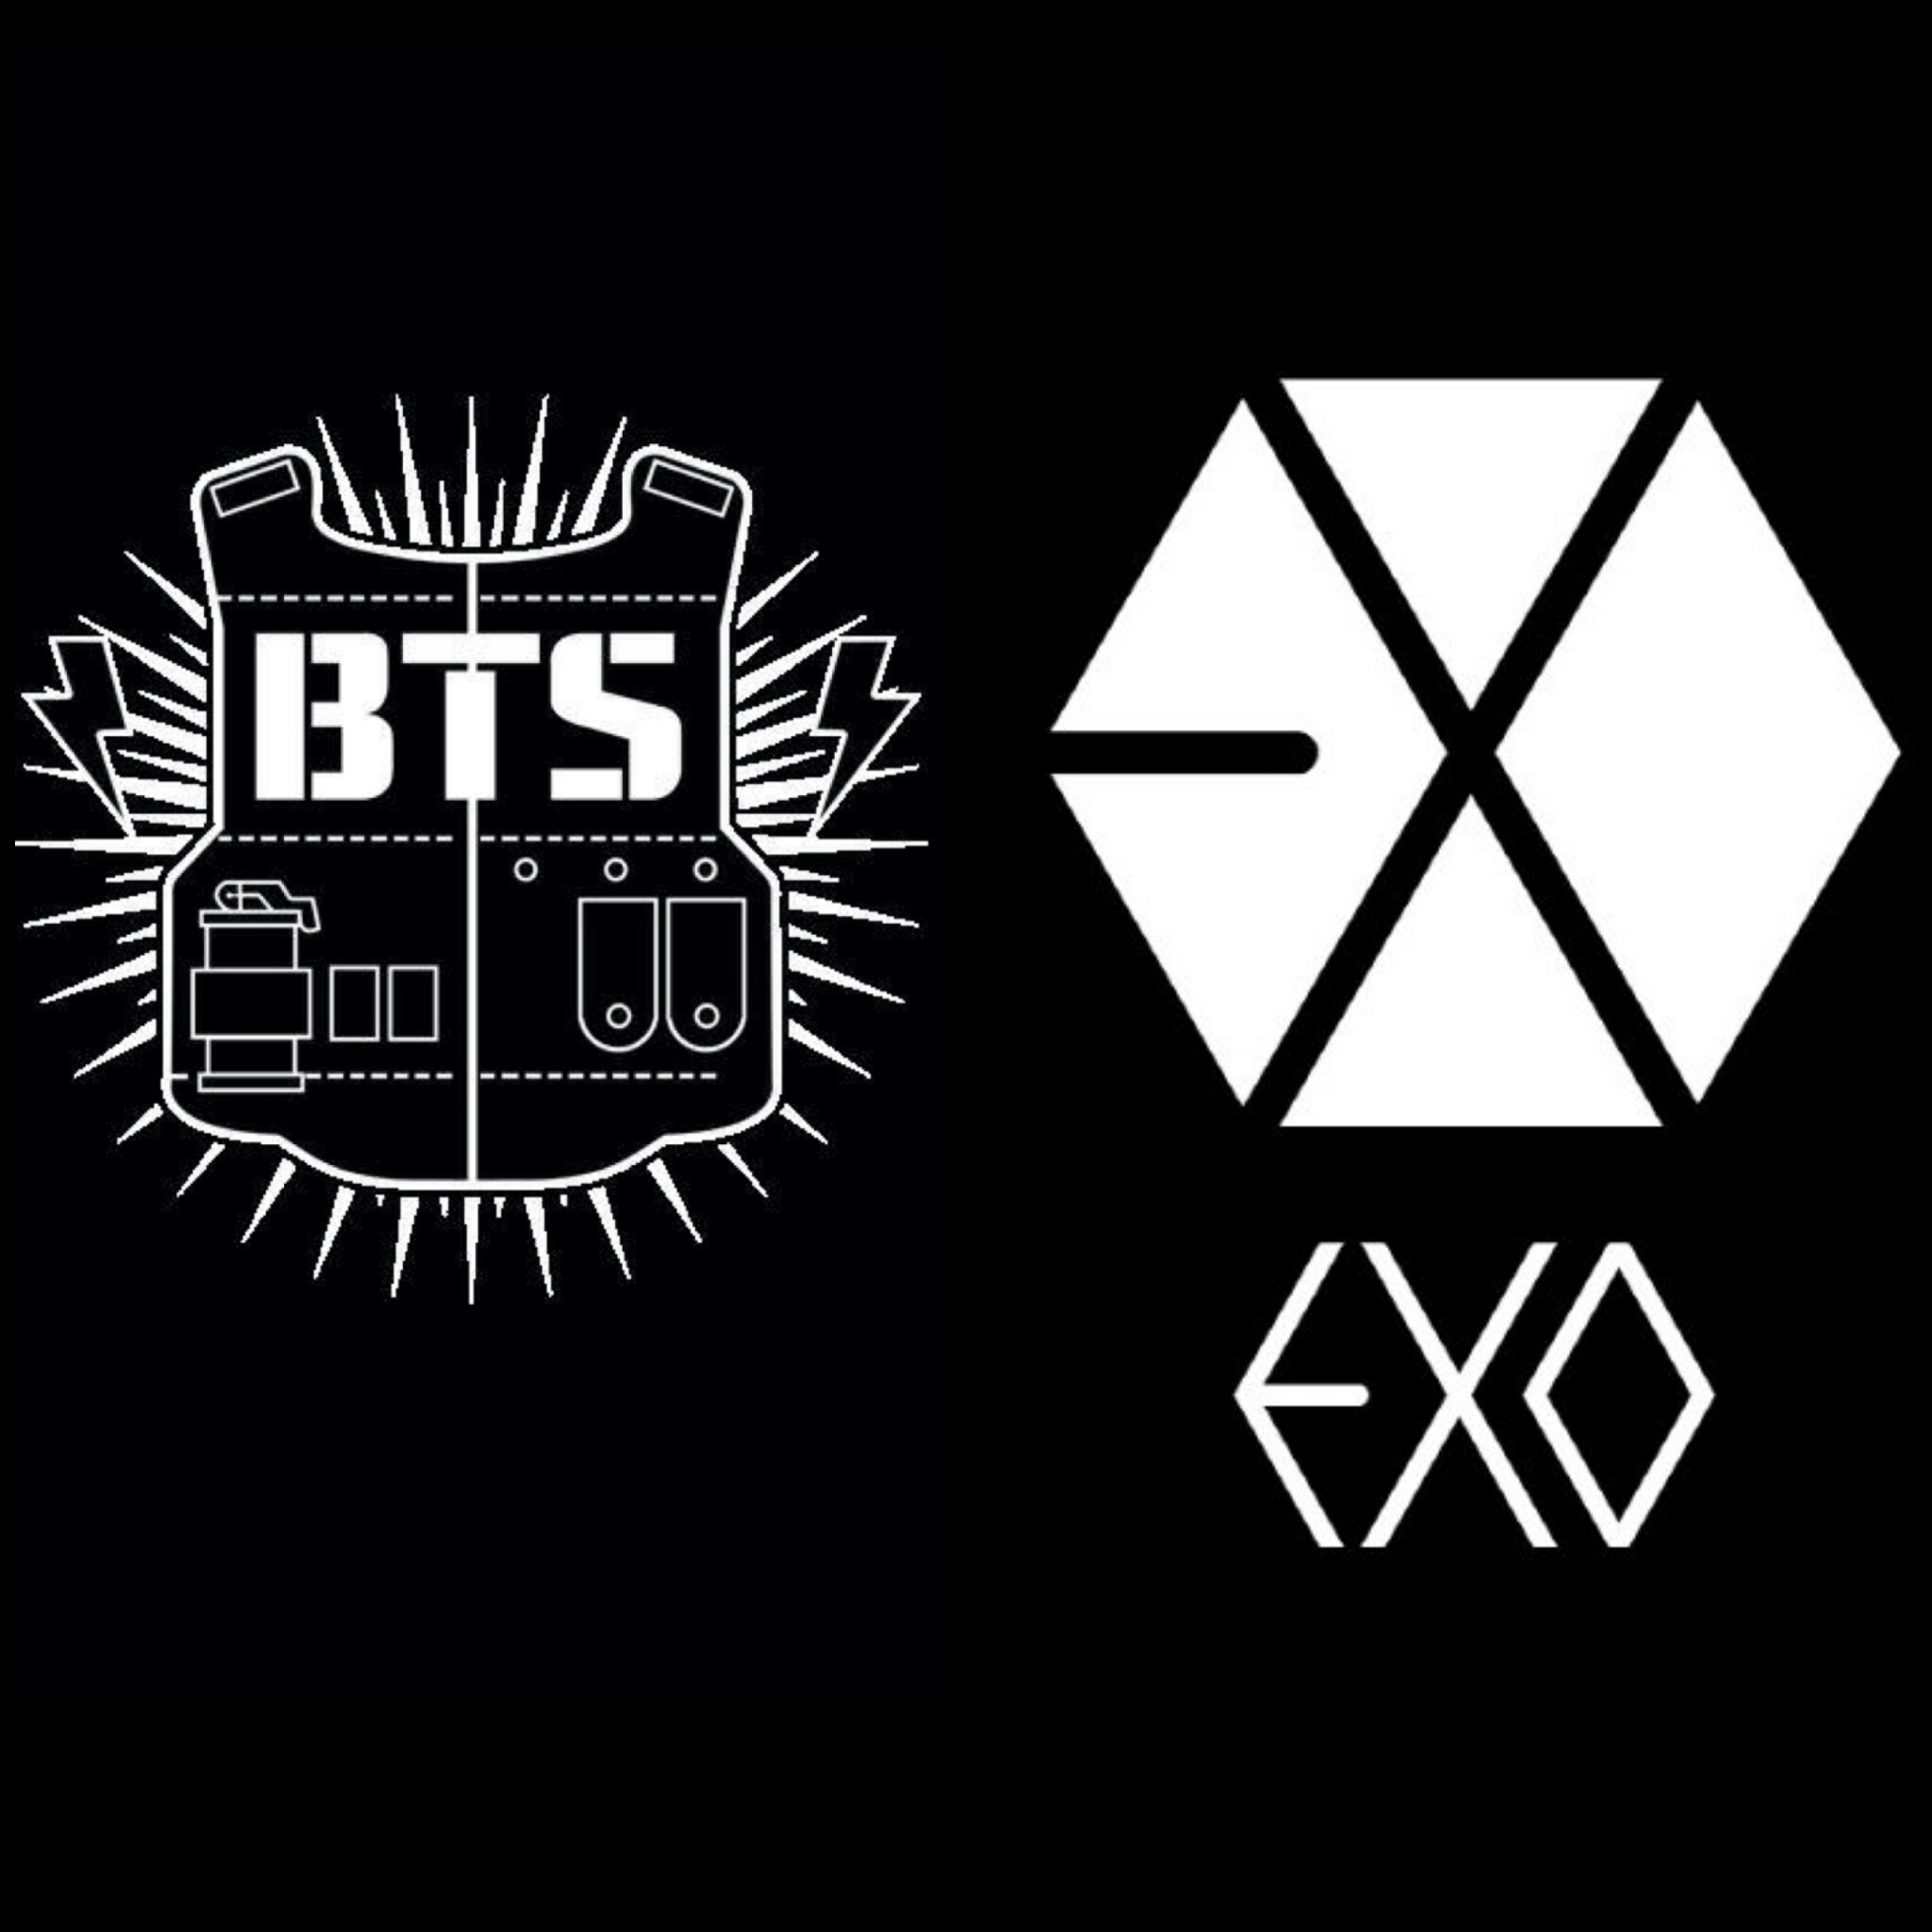 Bts vs exo vote. BTS логотип группы. BTS EXO эмблемы. EXO знак. АРМИ против эксо.